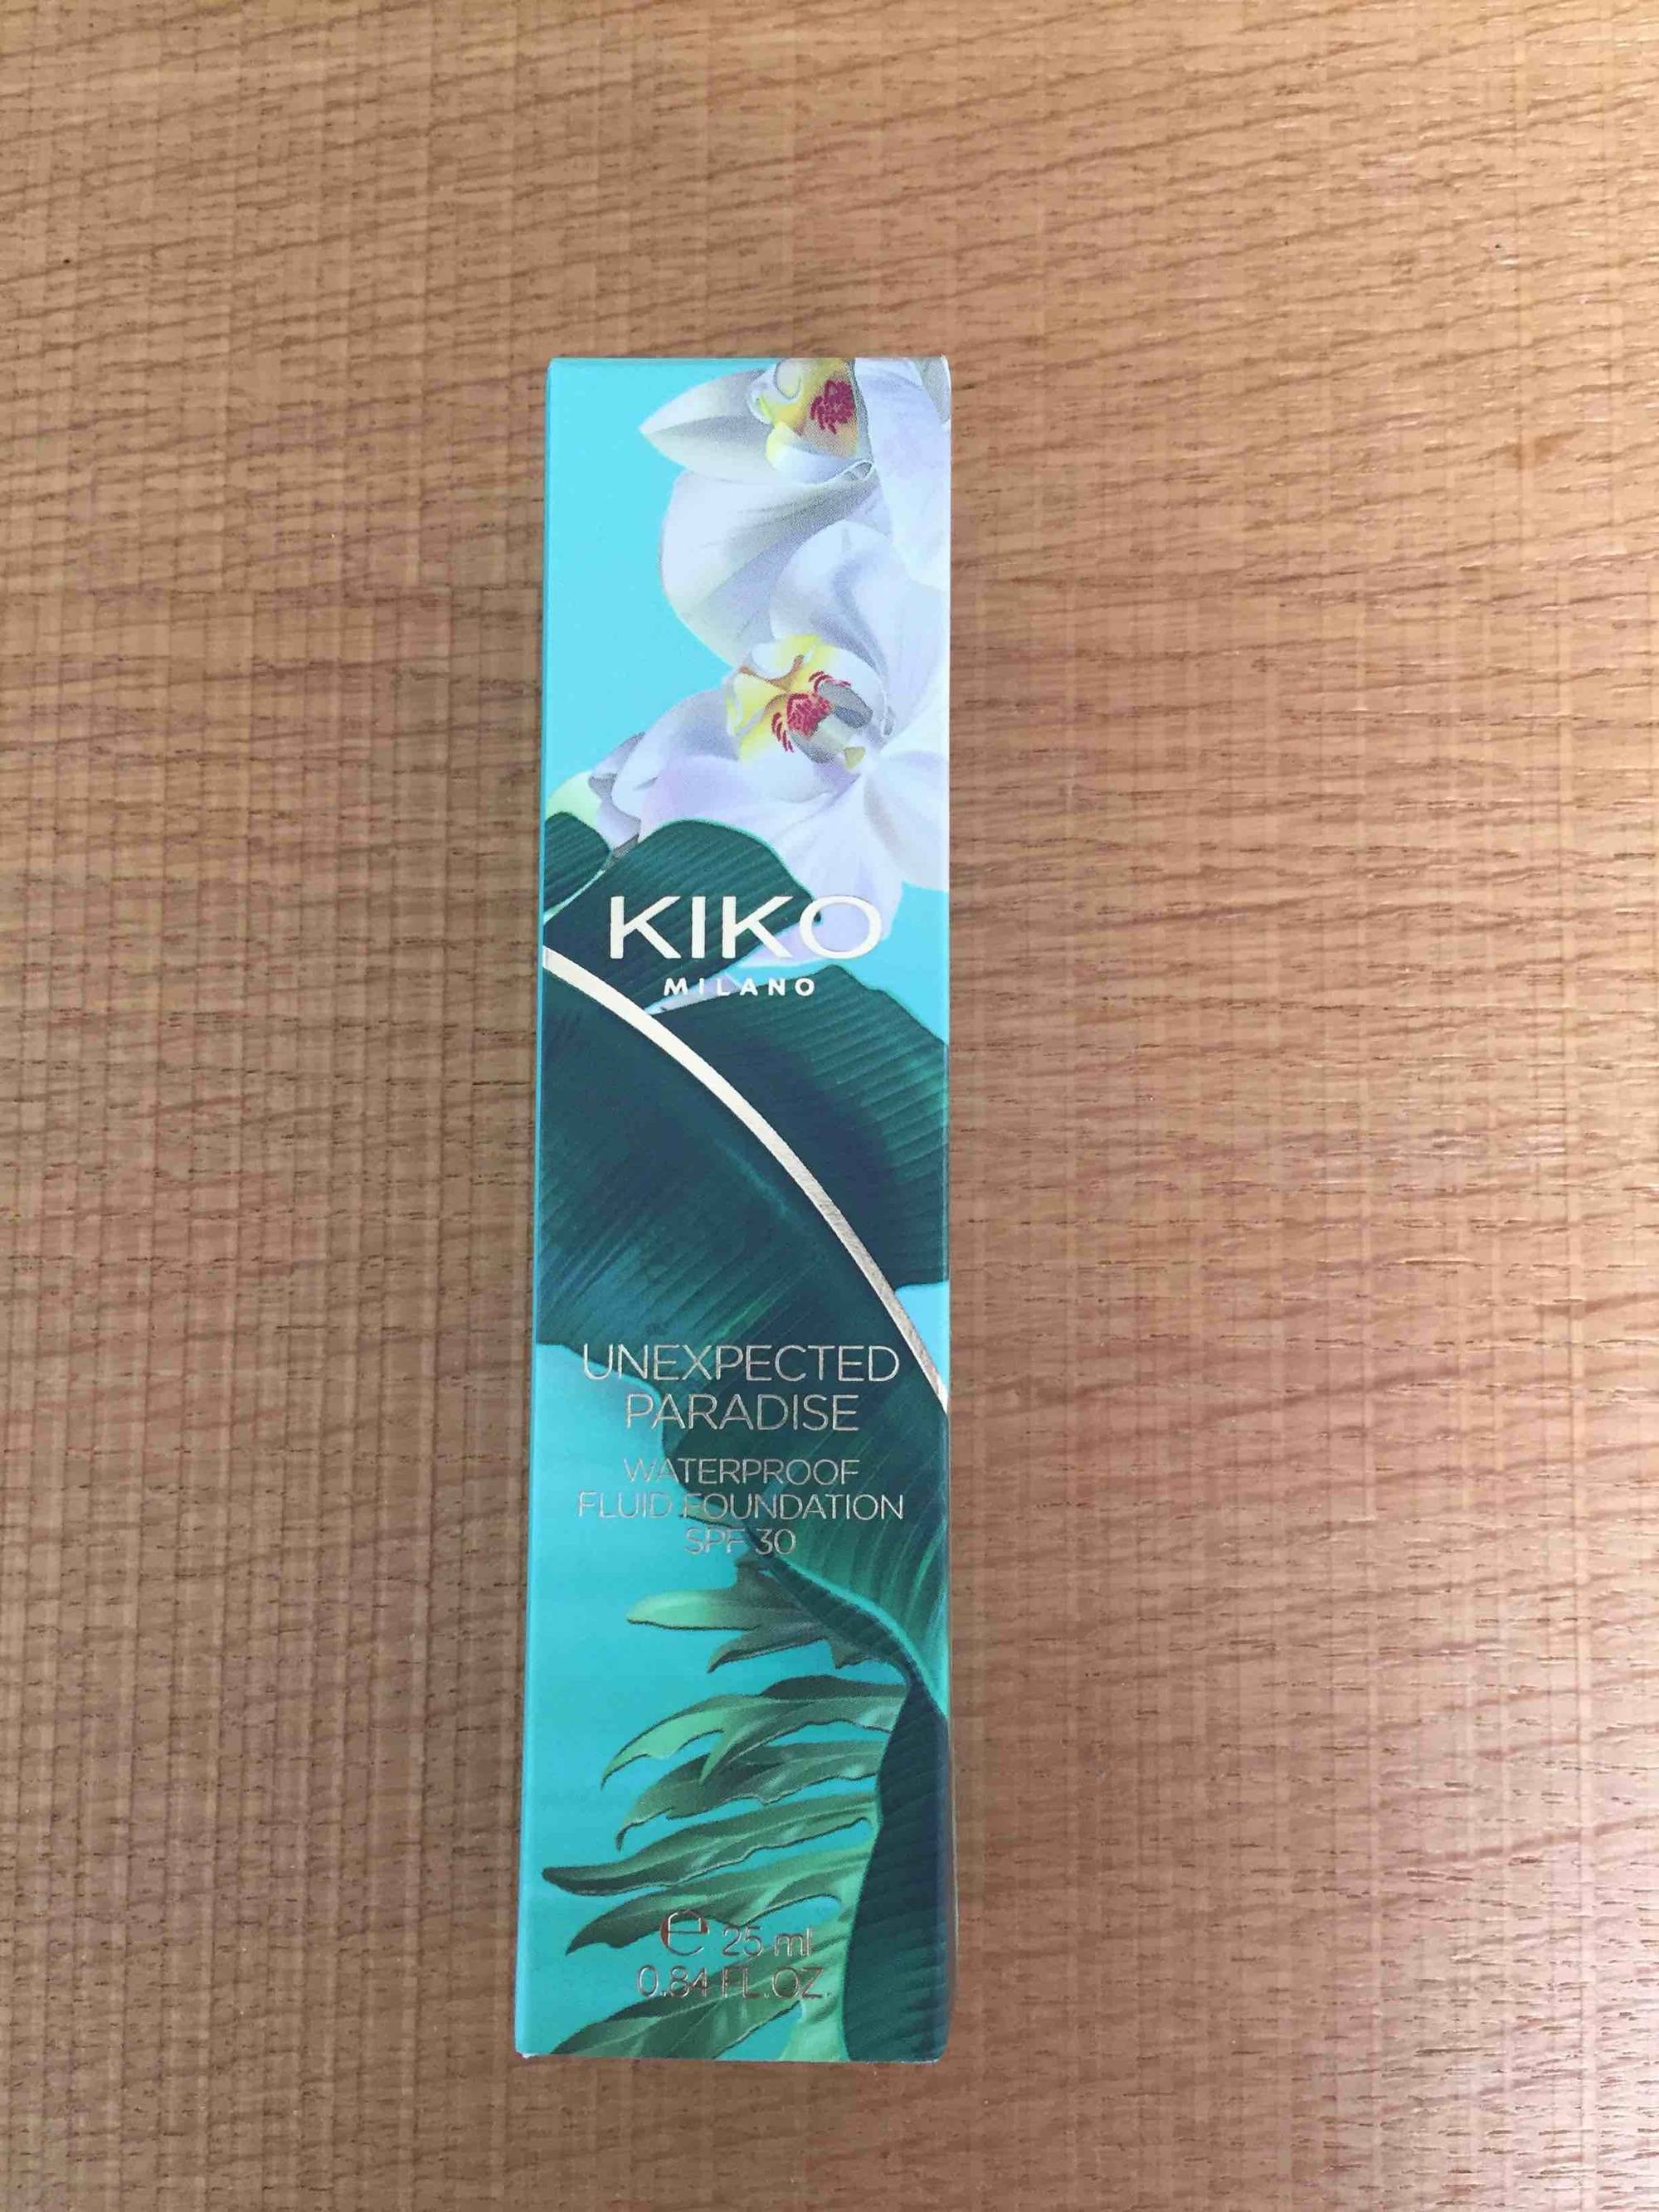 KIKO - Unexpected paradise - Waterproof fluid foundation SPF 30